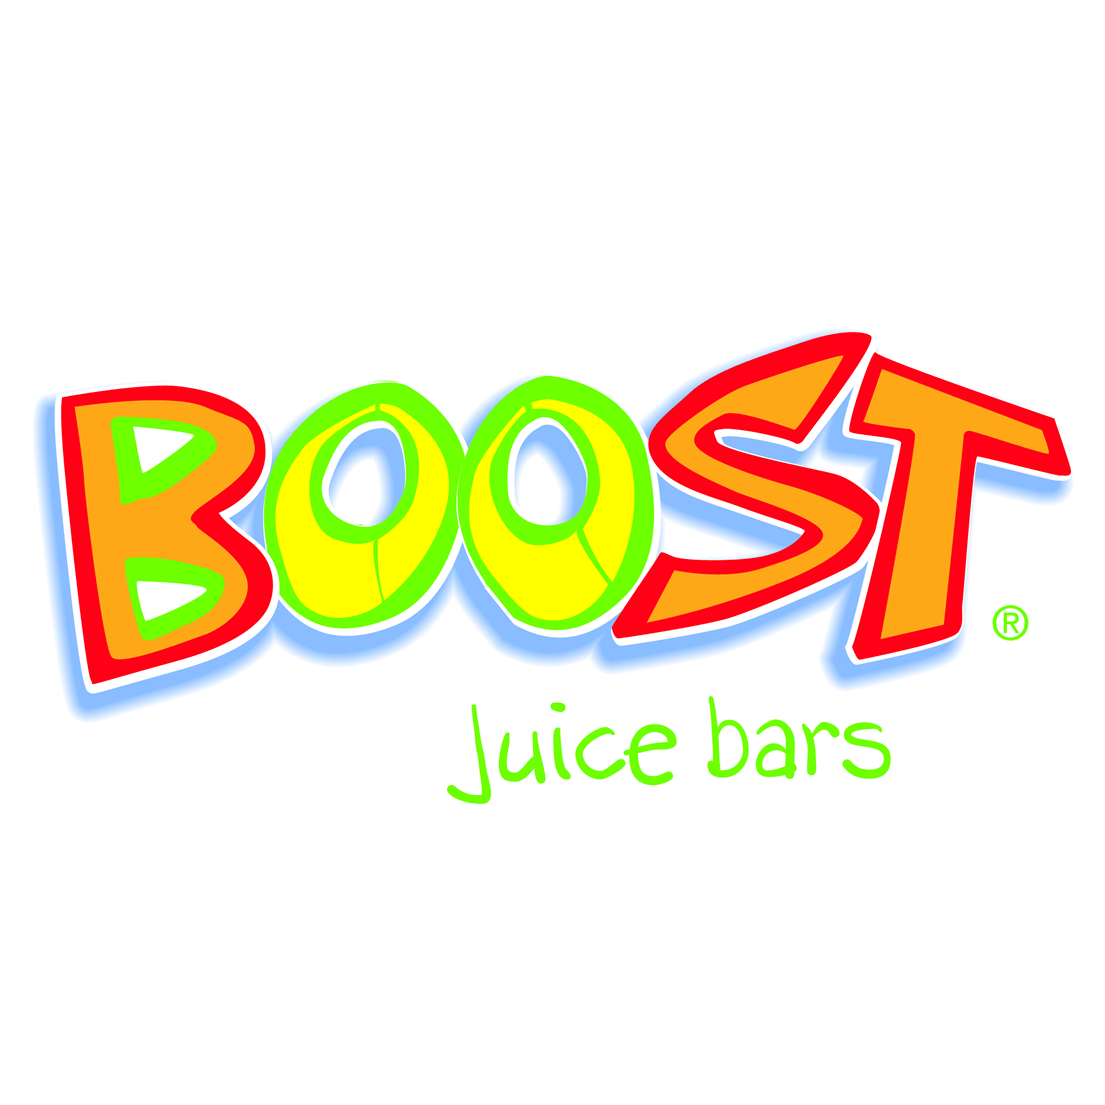 Boost Juice Logo - Boost juice logo png 1 PNG Image